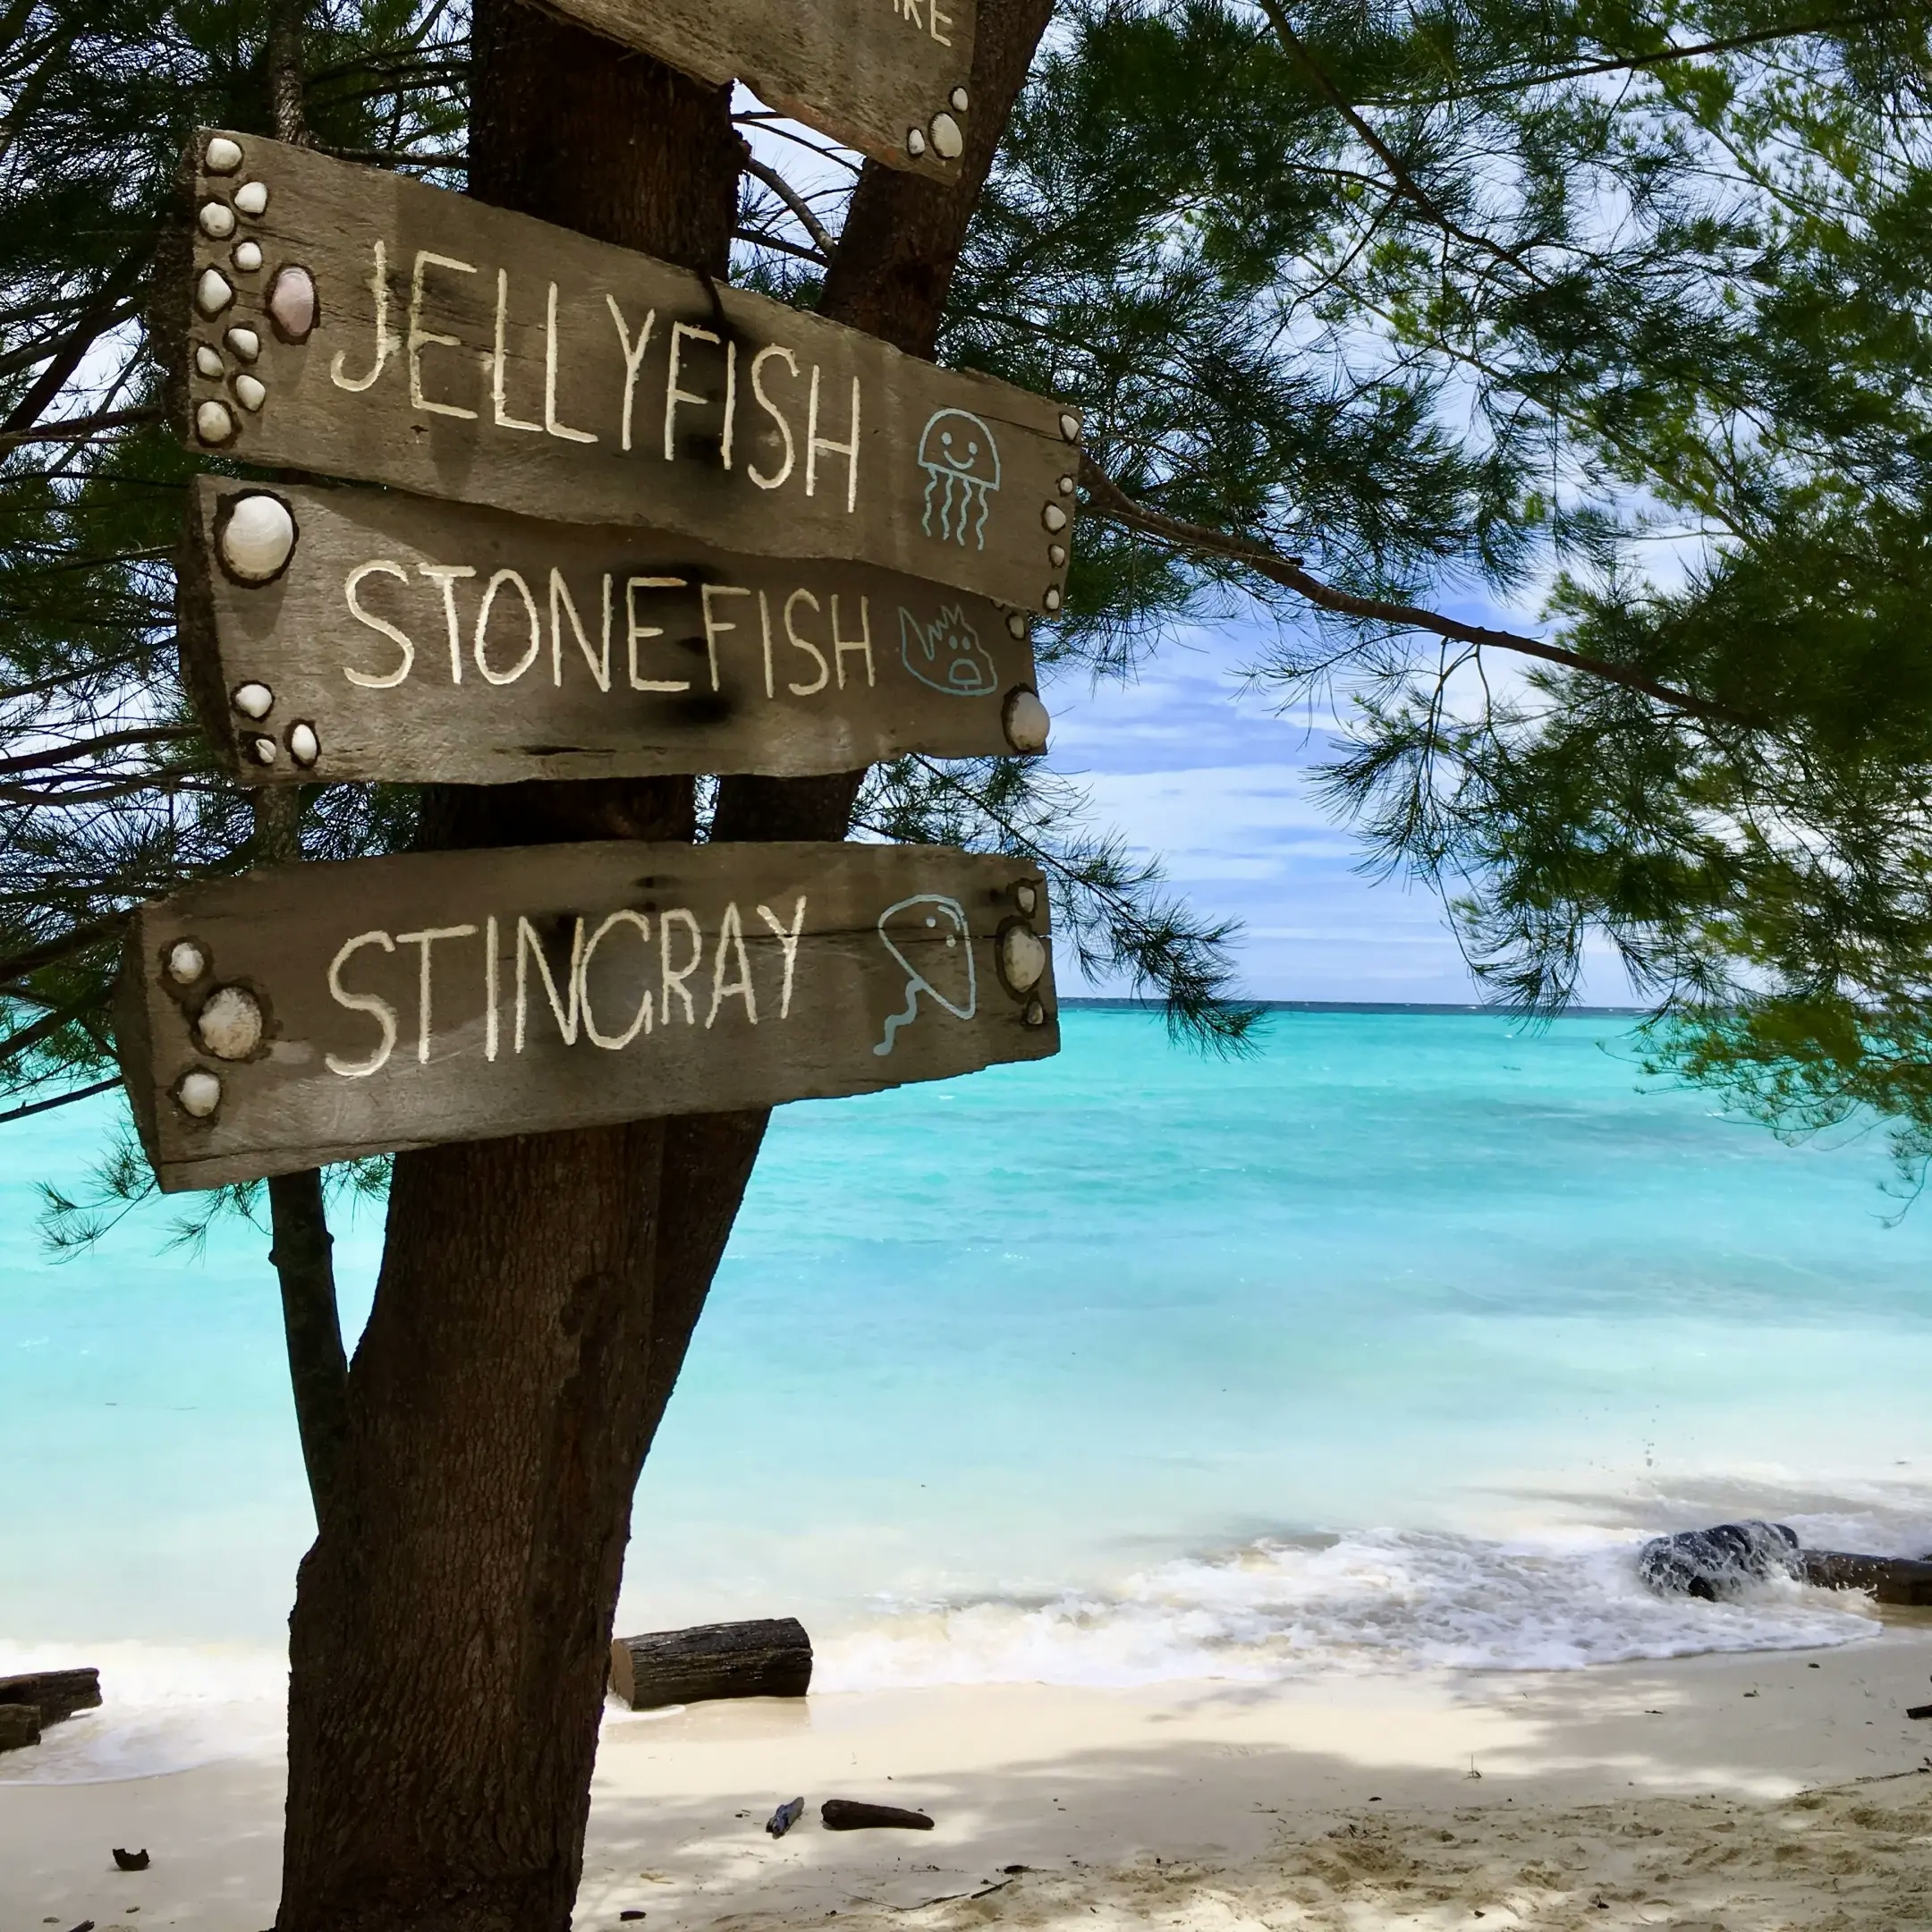 Jellyfish, Stonefish, Stingray — Mantanani Island